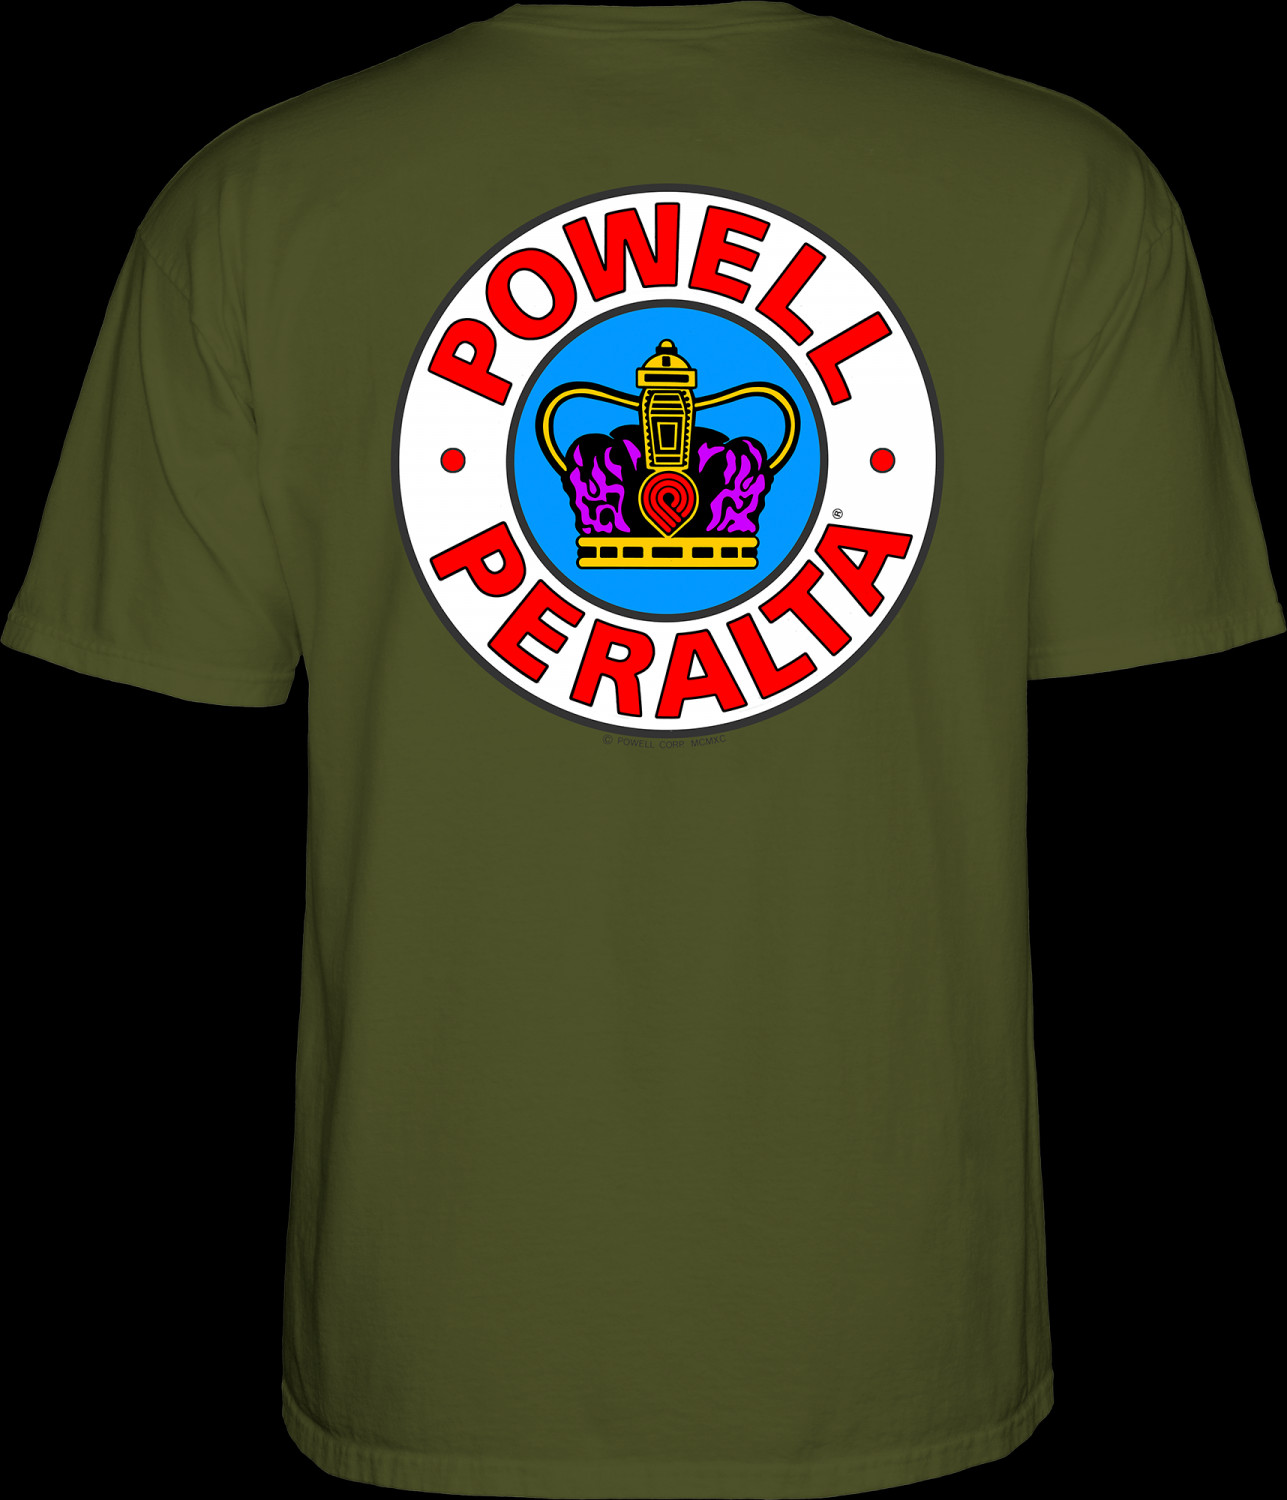 Powell Peralta Supreme T-Shirt Military Green Photo #1 - Photo Gallery